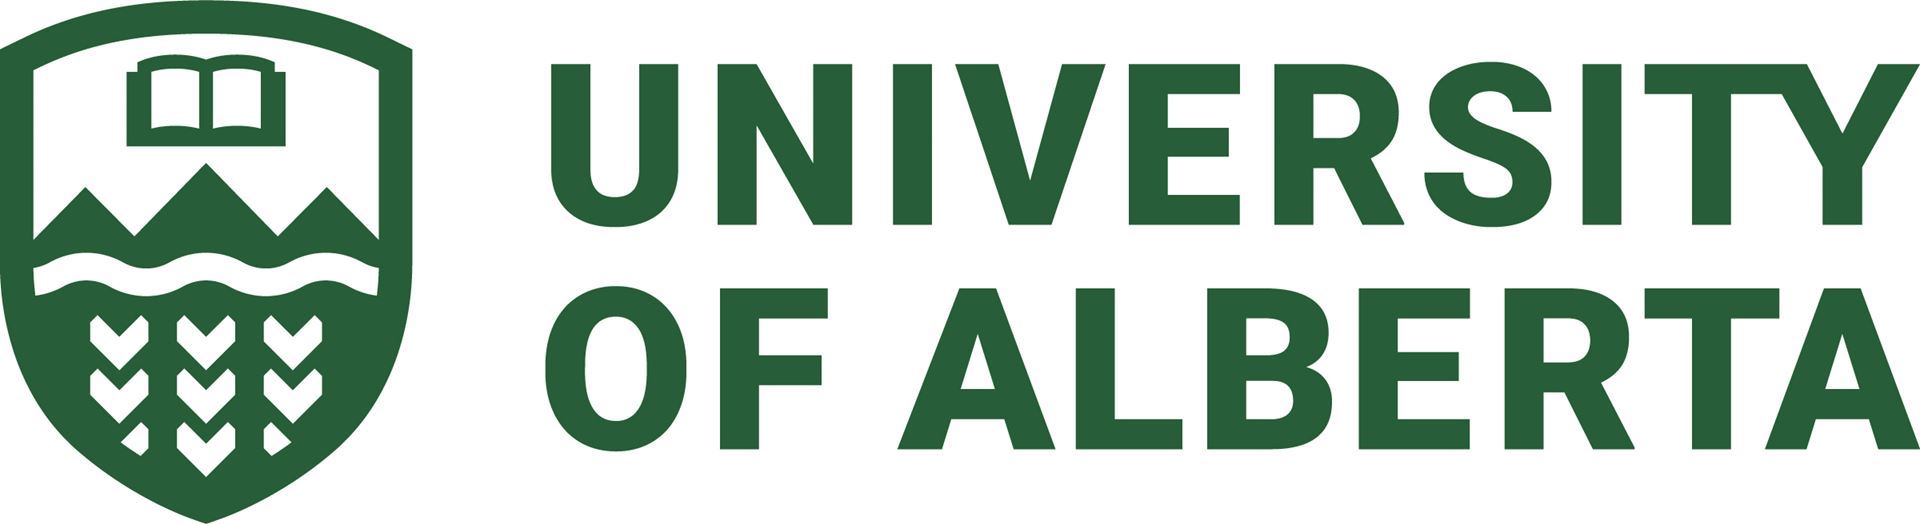 University of Alberta Logo - green.